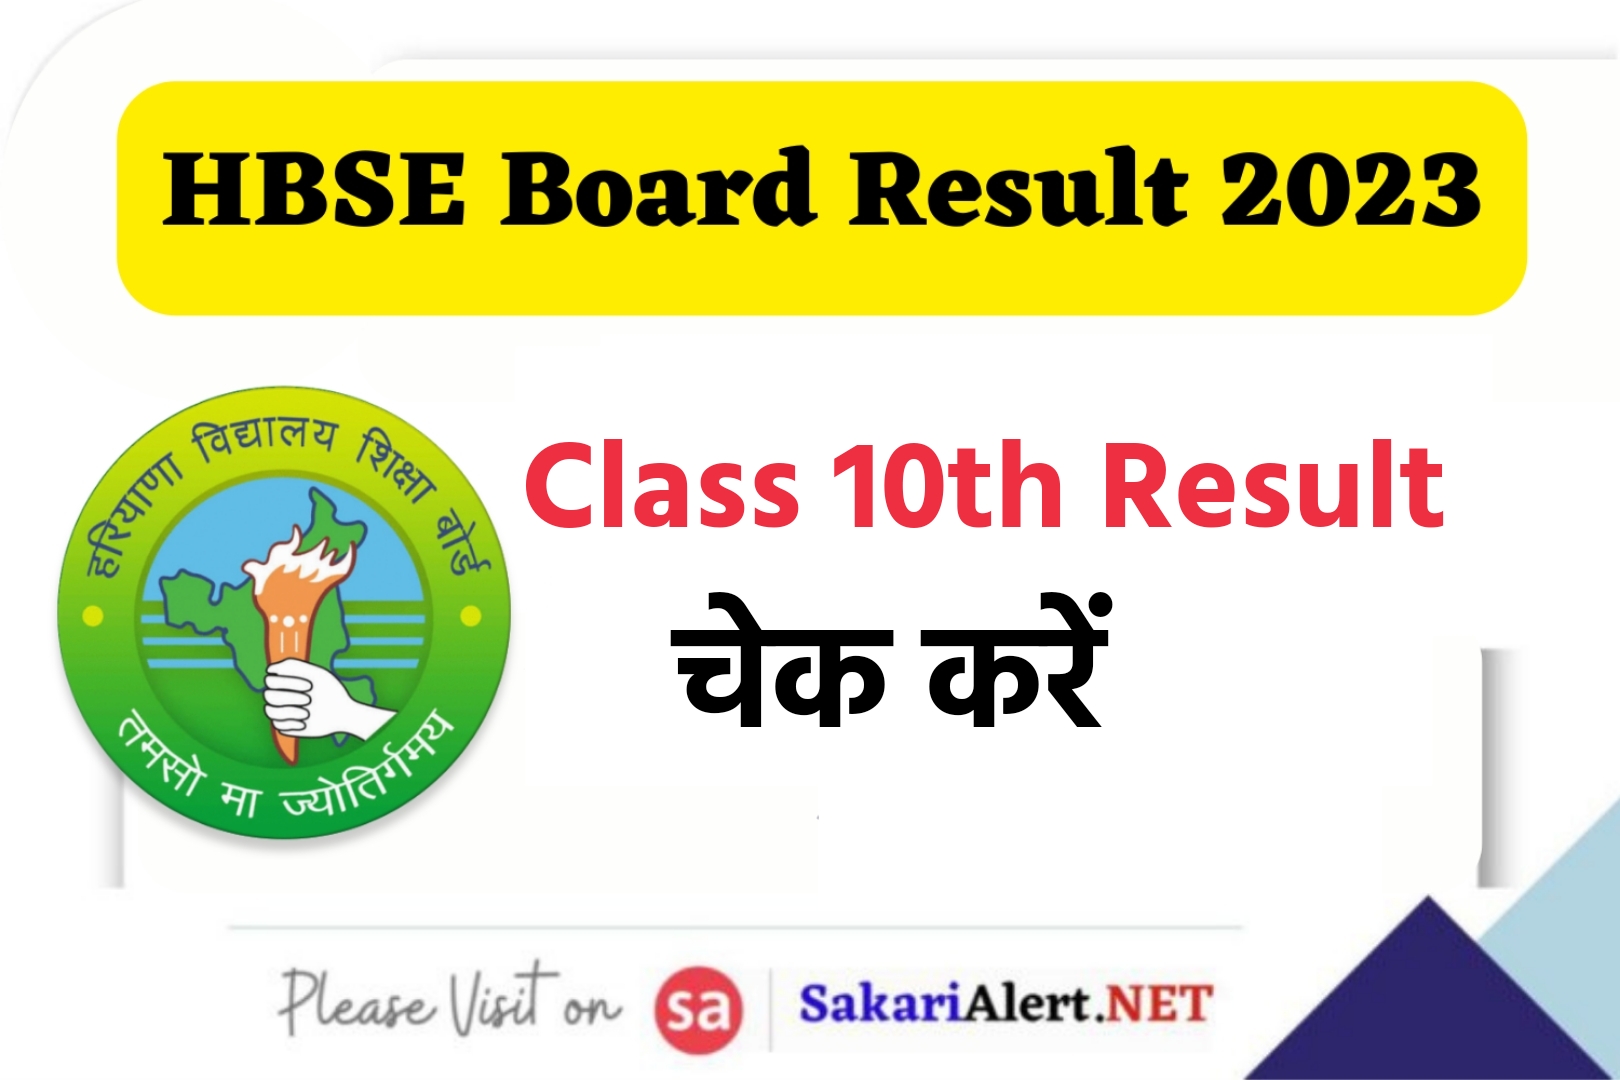 Haryana Board Class 10th Result